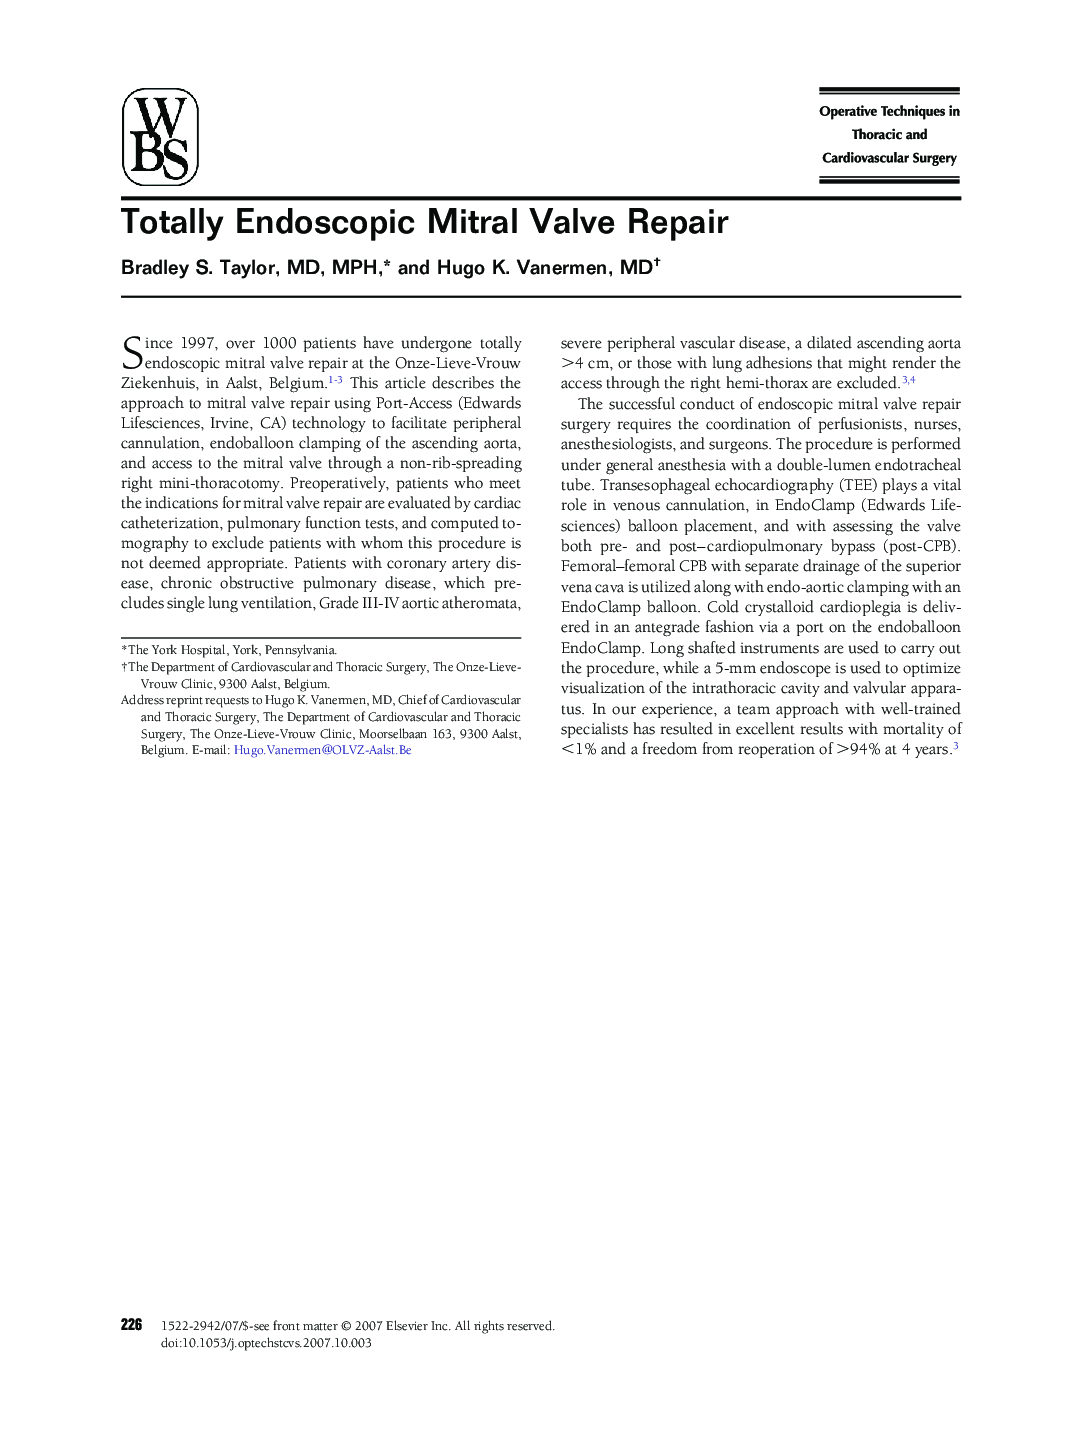 Totally Endoscopic Mitral Valve Repair